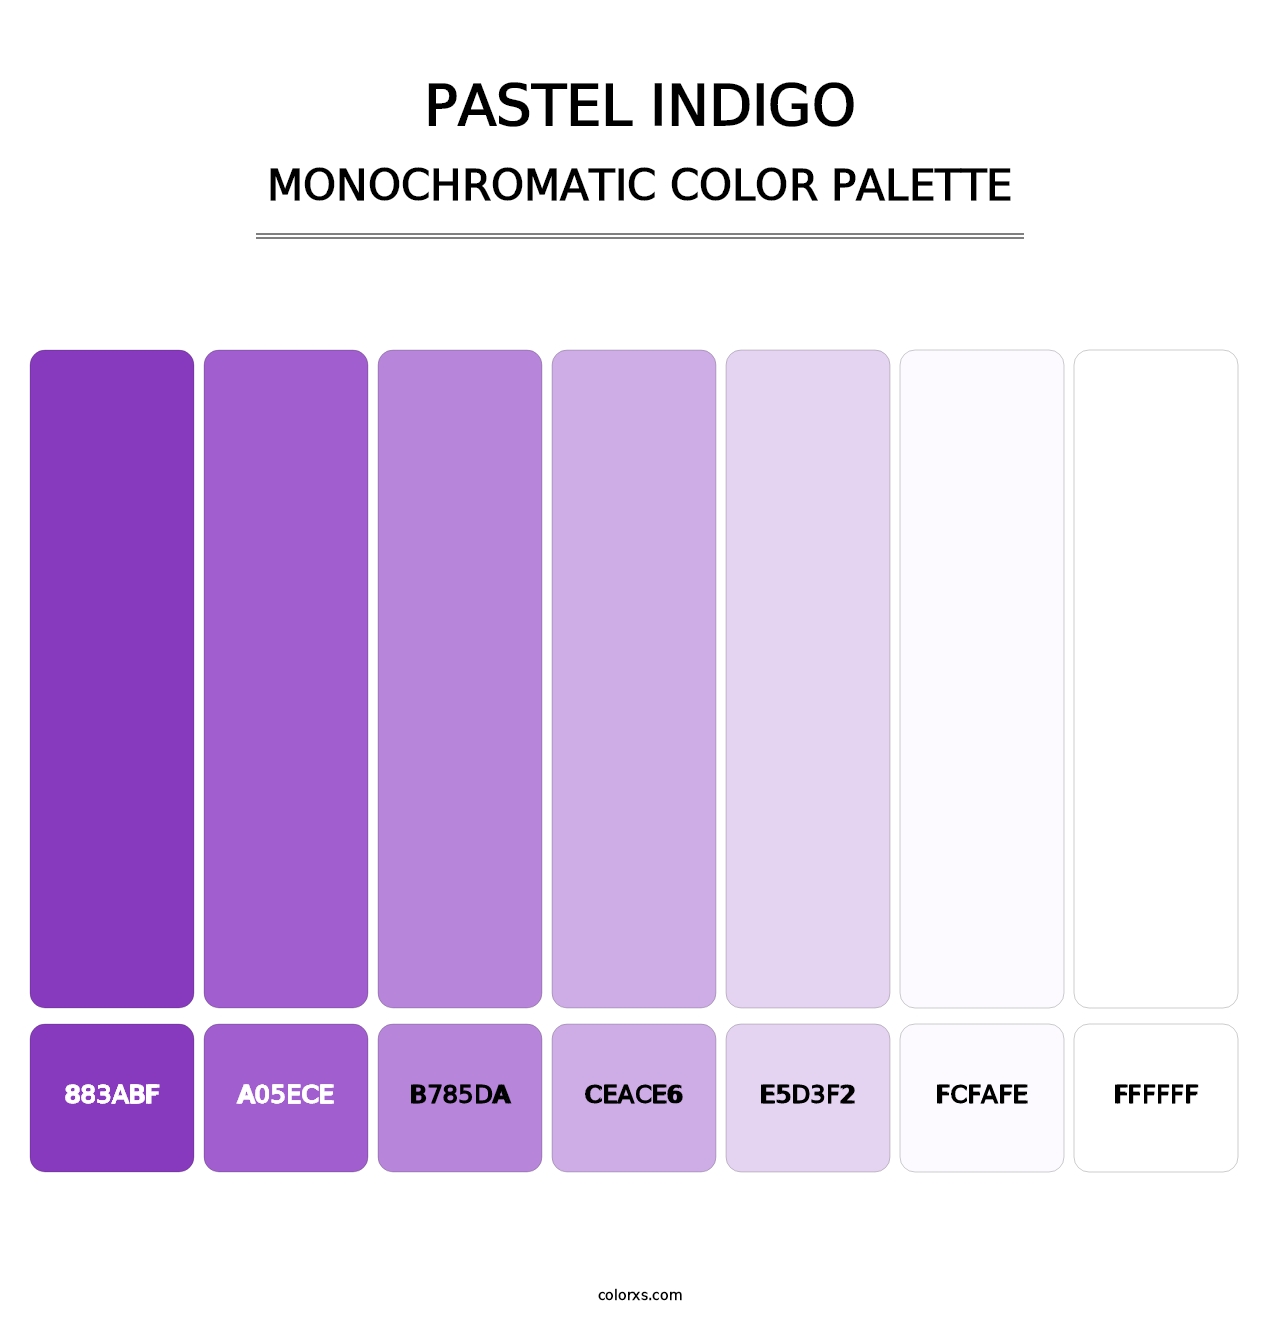 Pastel Indigo - Monochromatic Color Palette